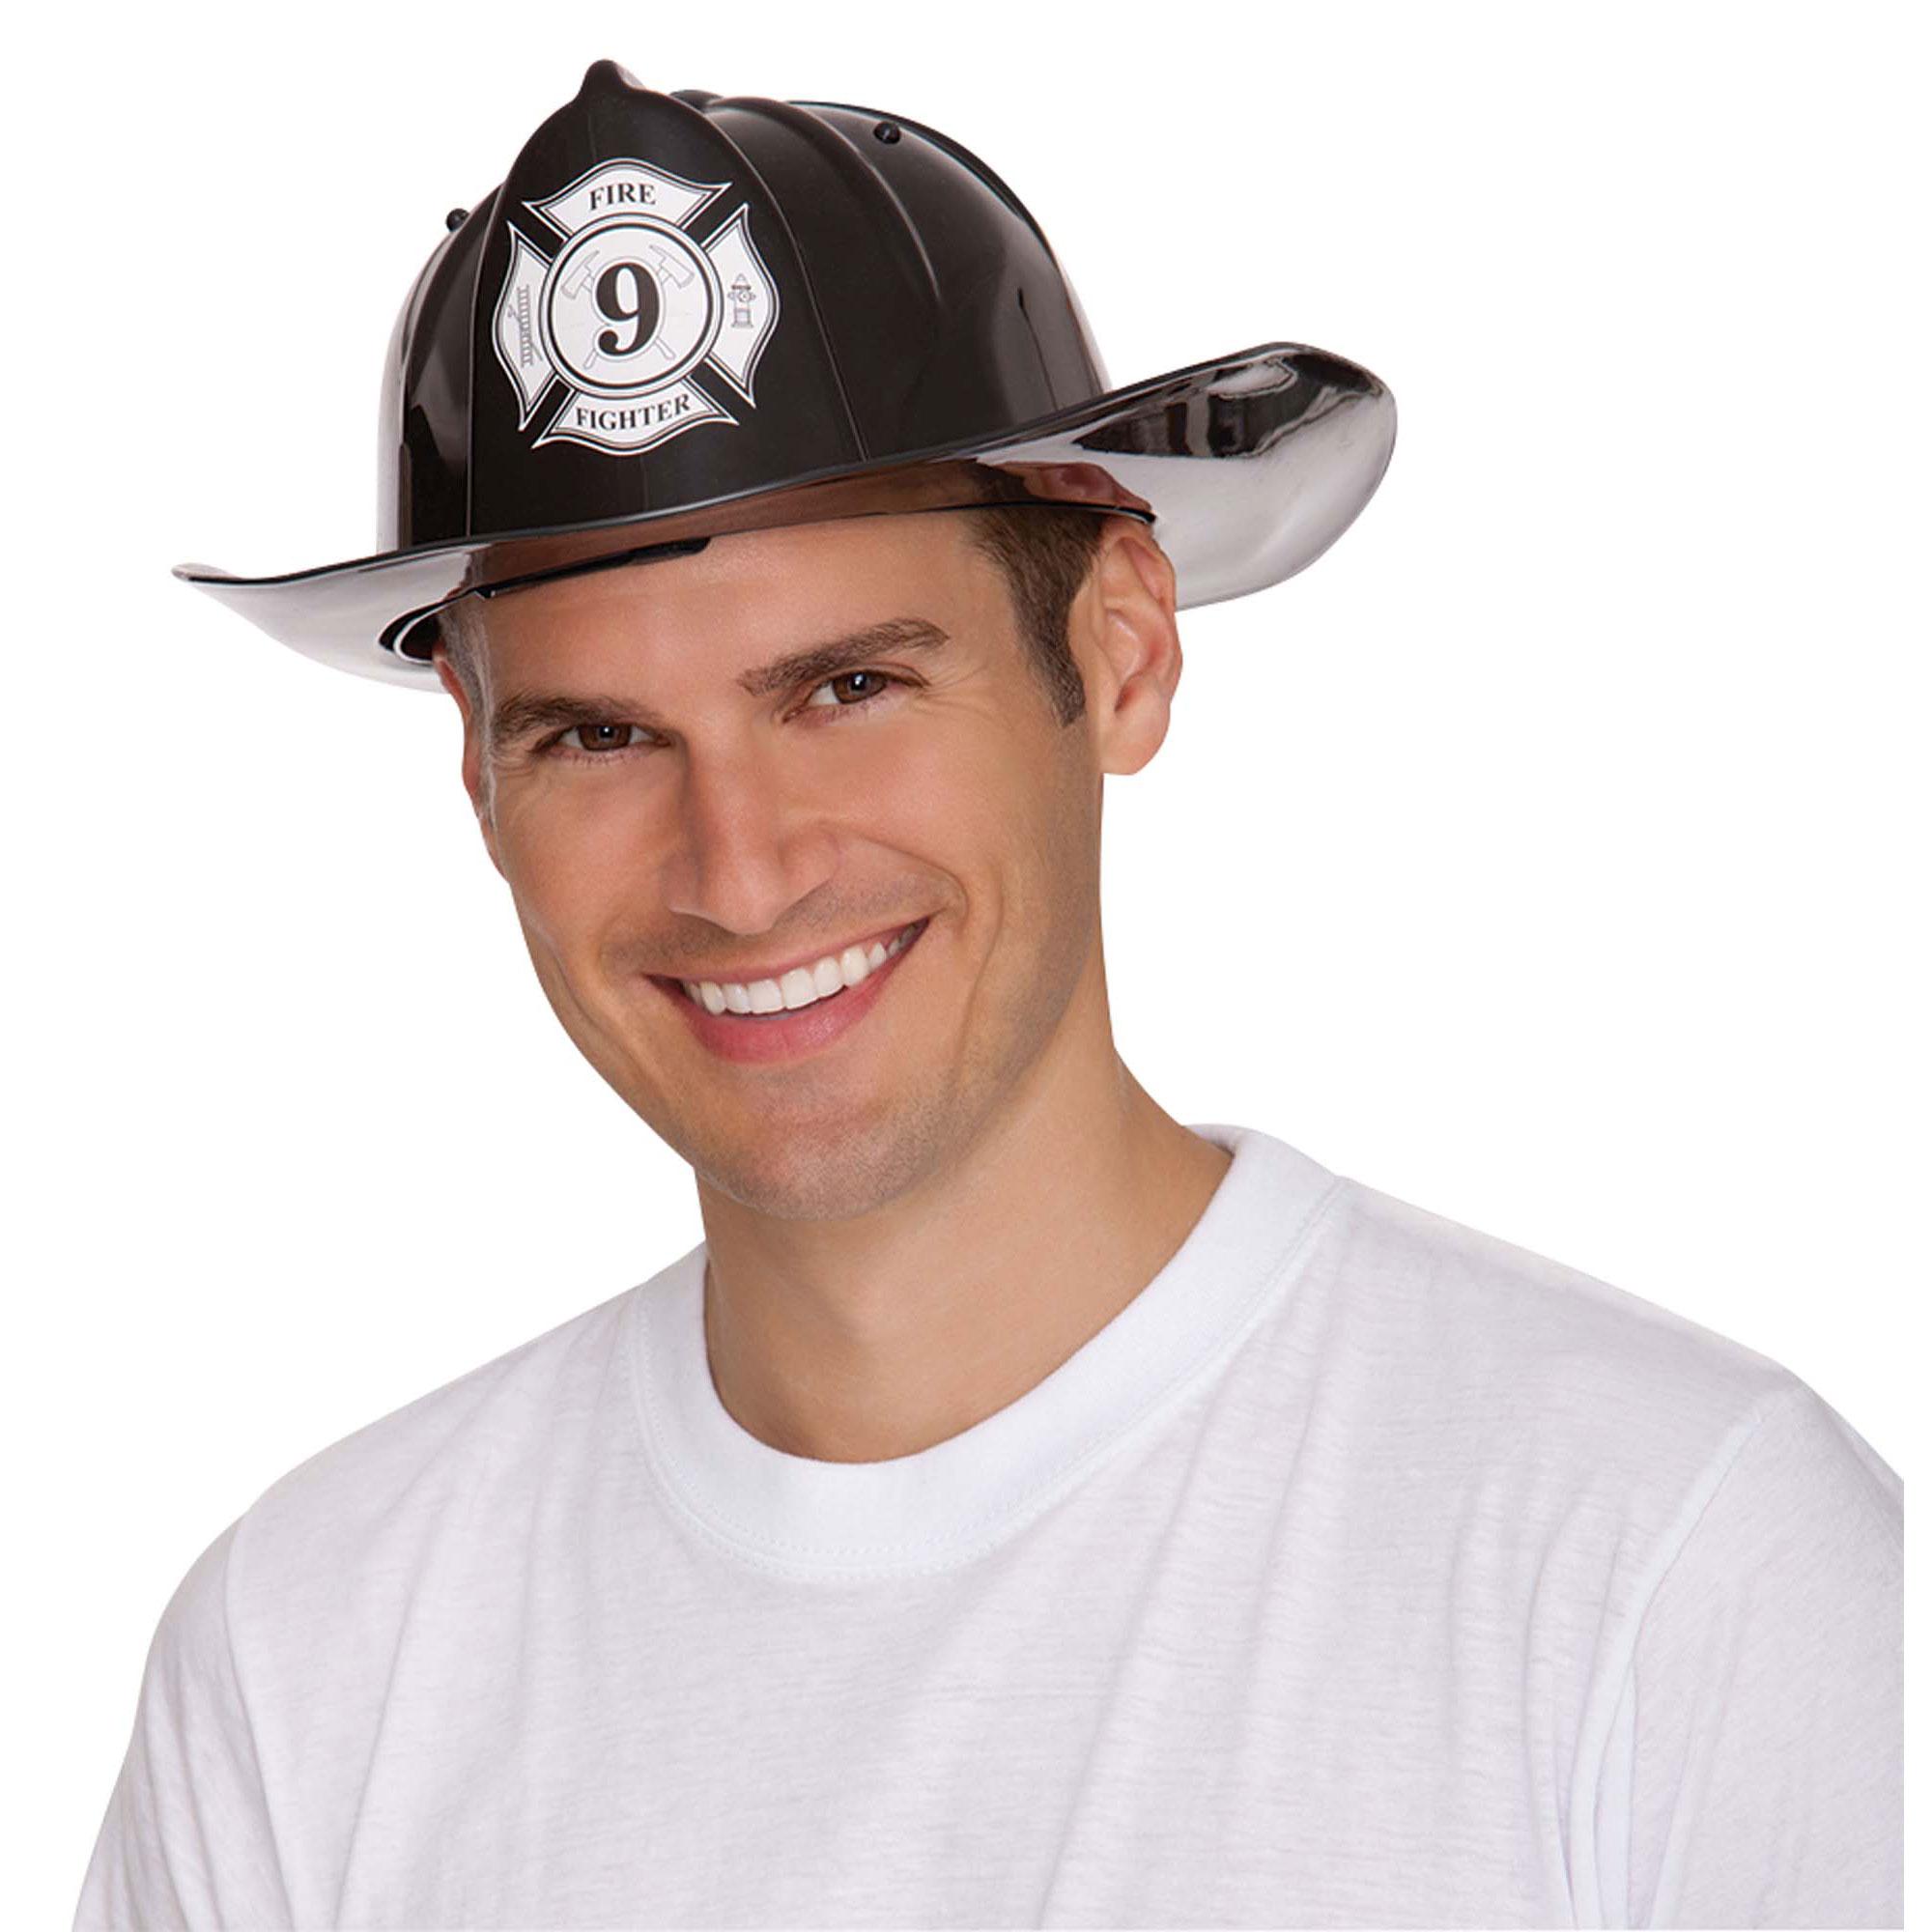 Fireman's Hat Costumes & Apparel - Party Centre - Party Centre